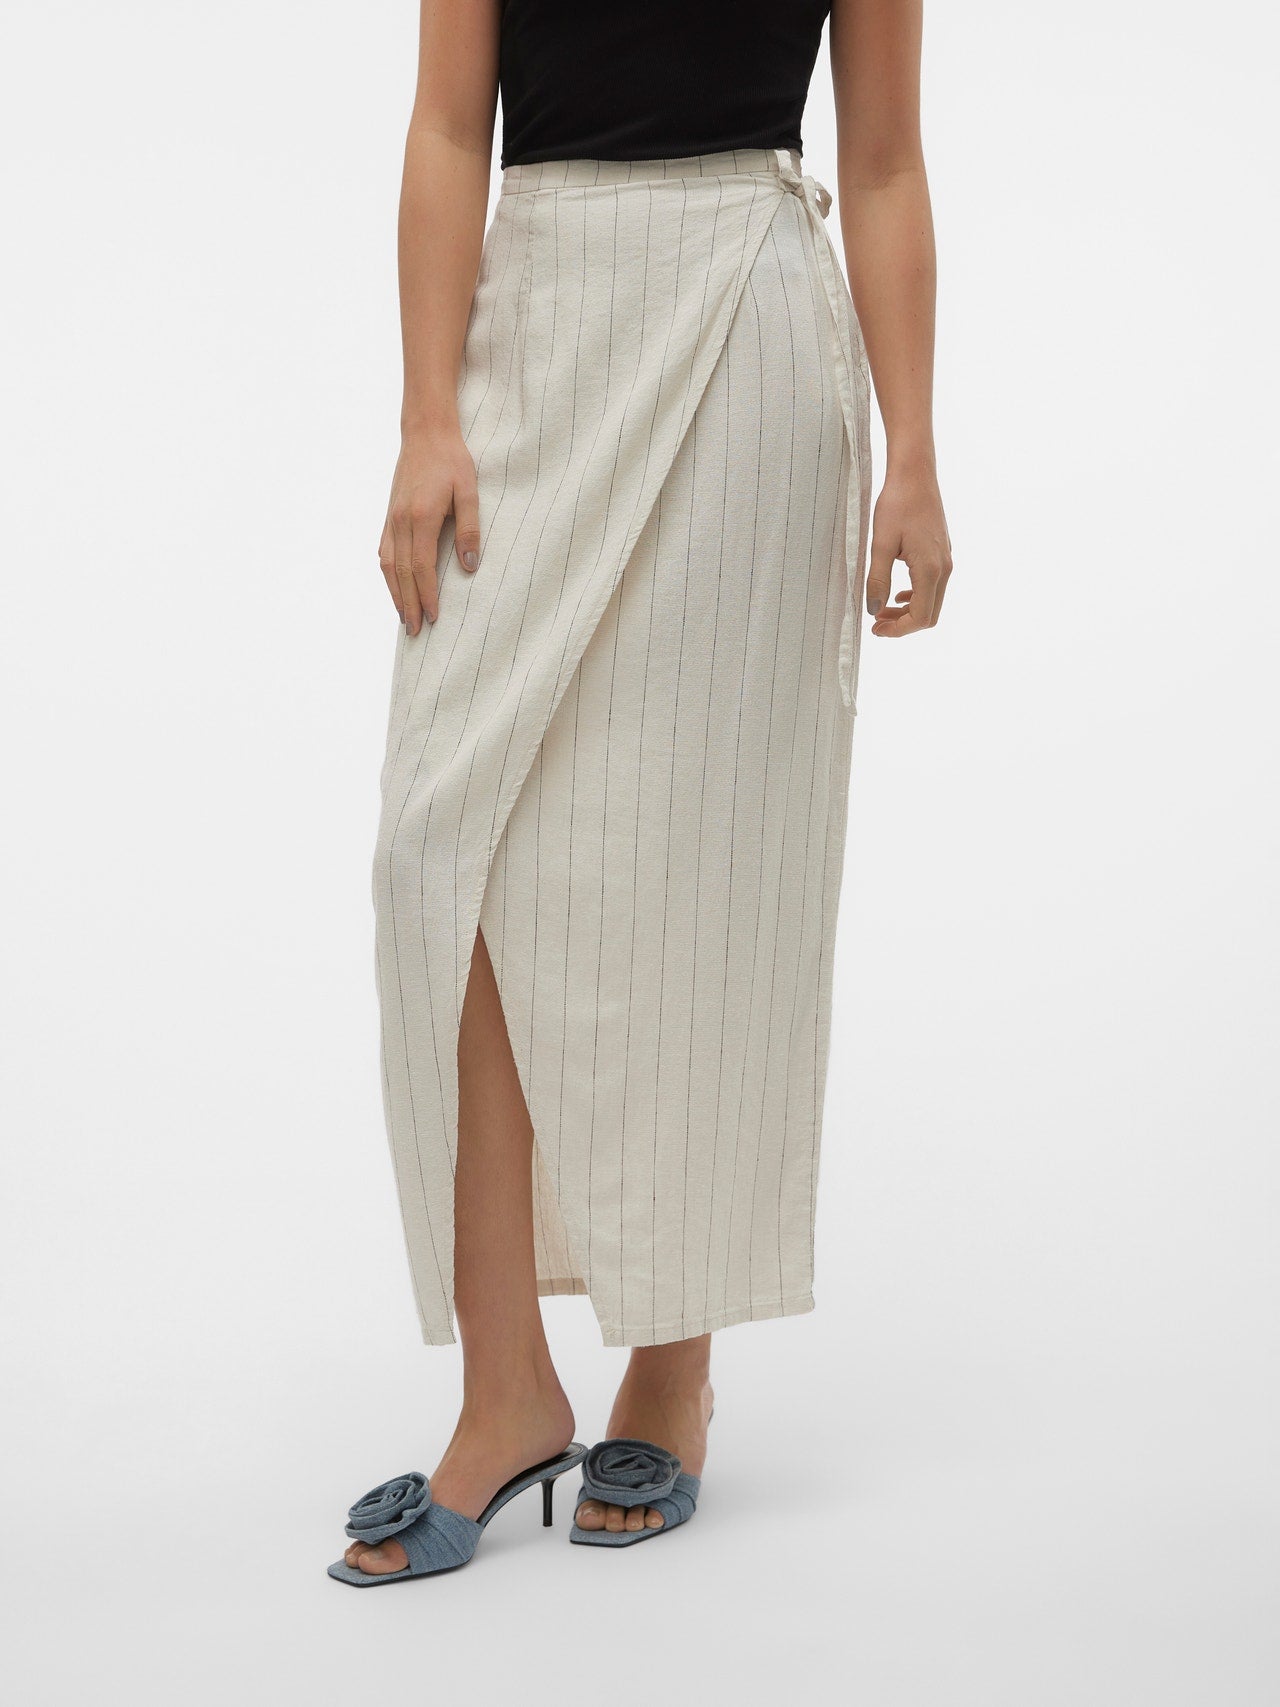 Vero Moda Mindy Linen Wrap Skirt